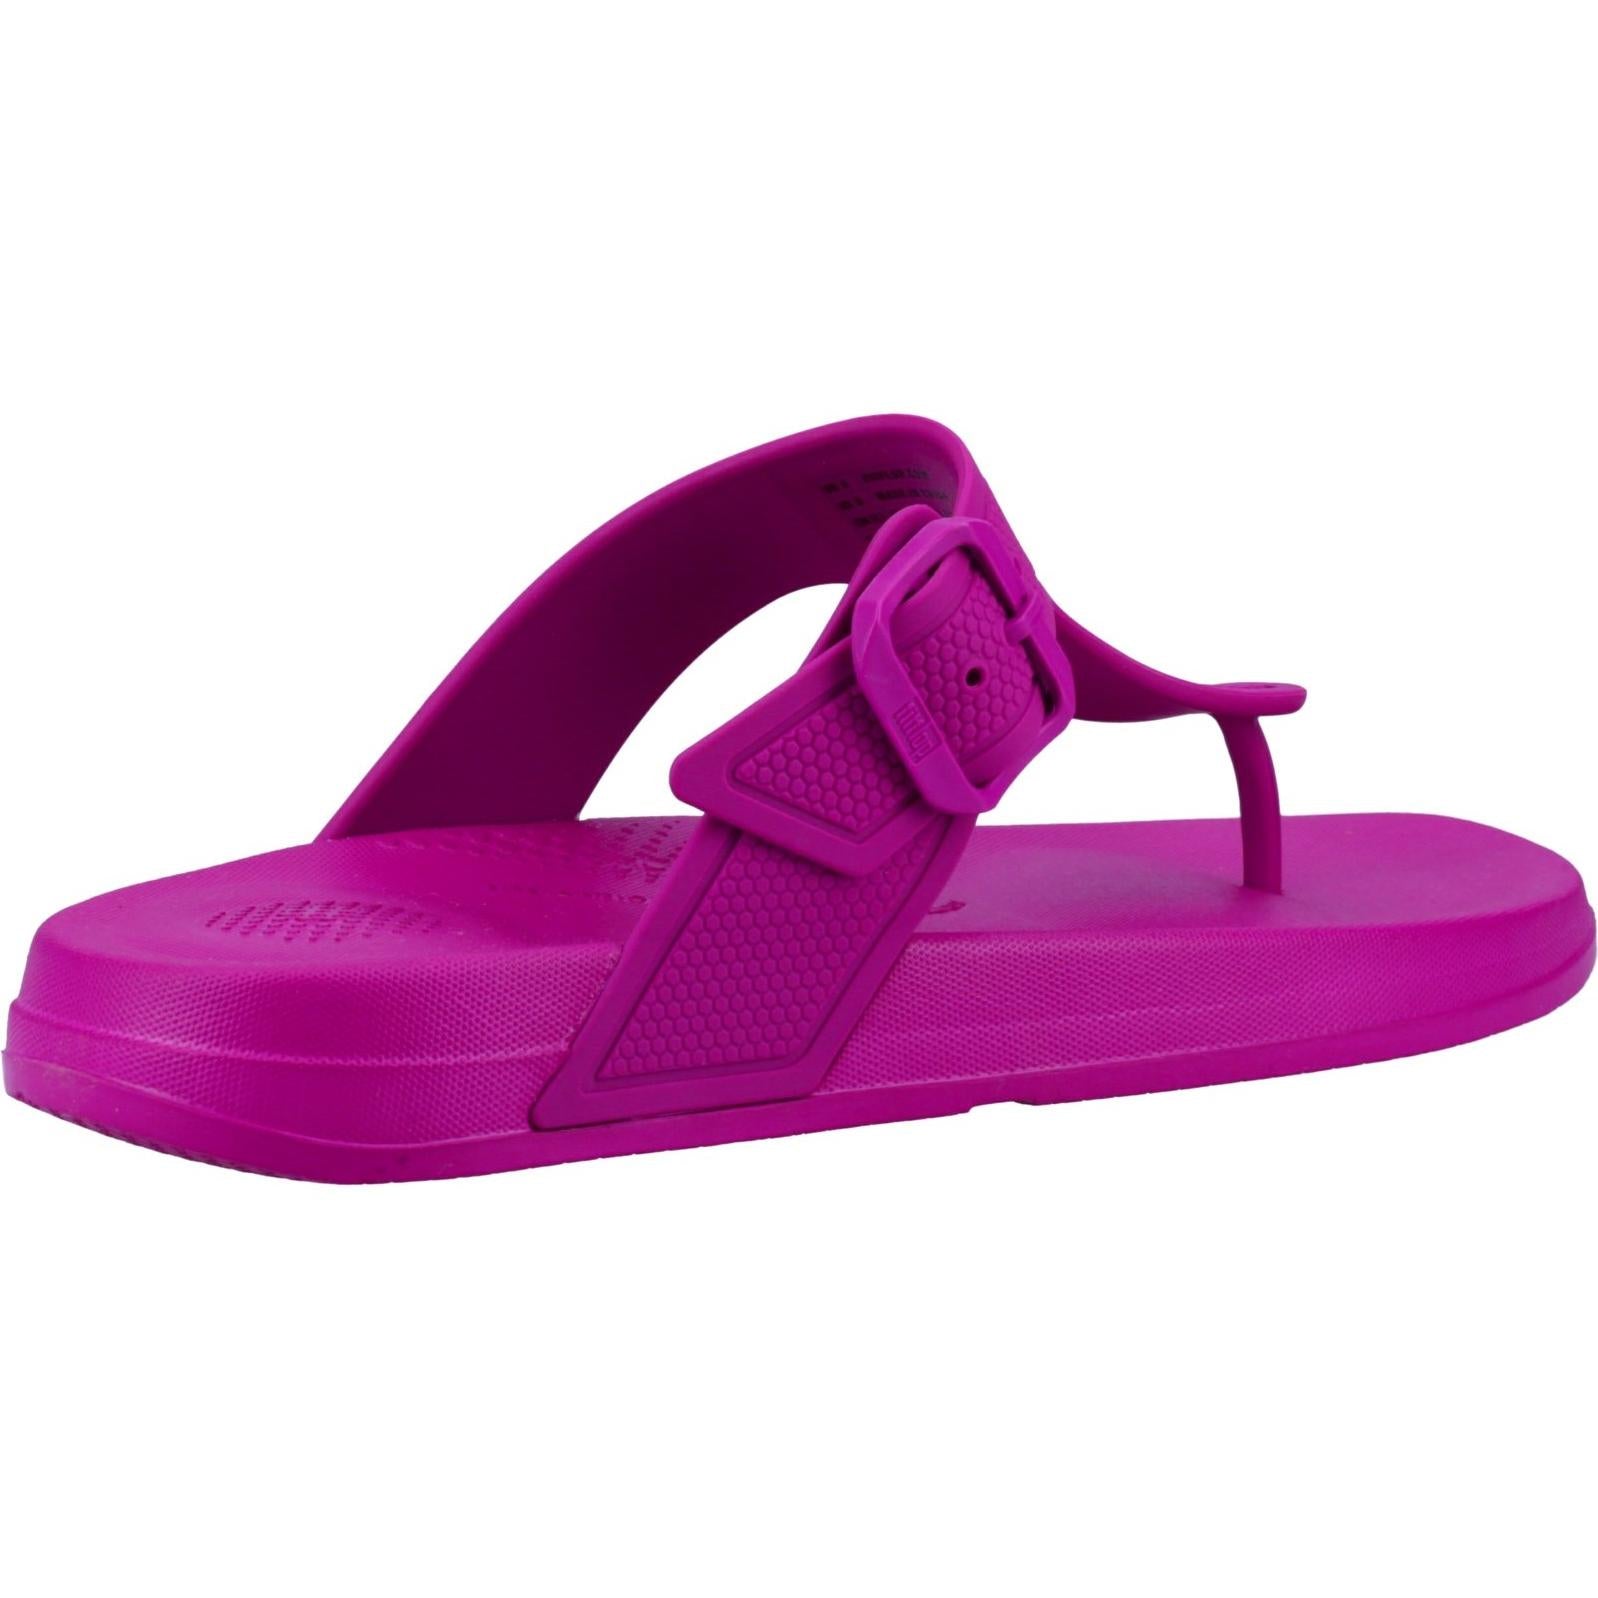 Fitflop iQUSHION Adjustable Buckle Flip-Flops Sandals